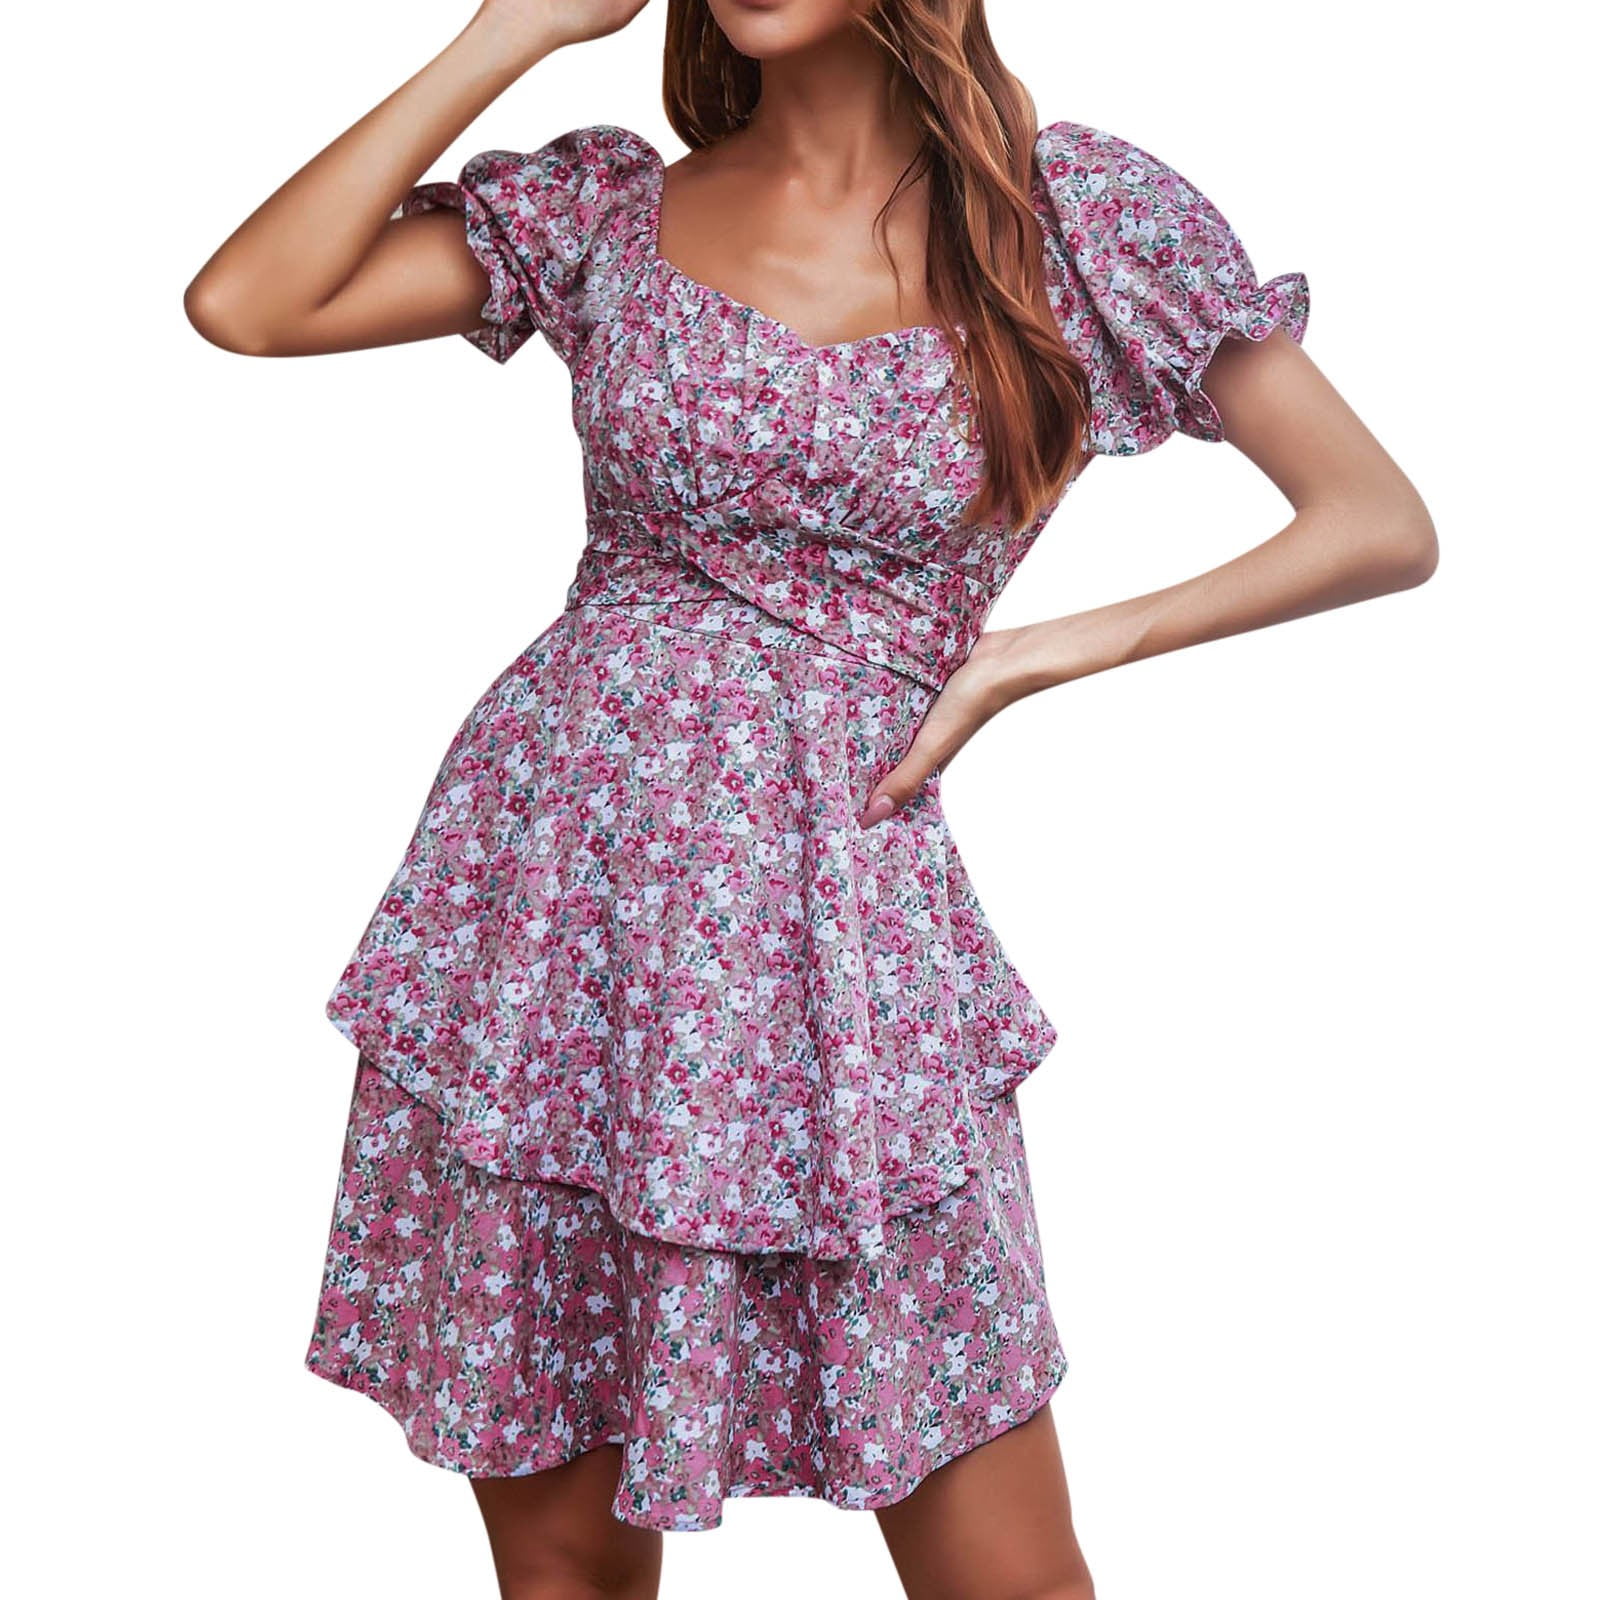 Fashion Dresses Halter Dresses Bodyflirt Halter Dress pink flower pattern elegant 